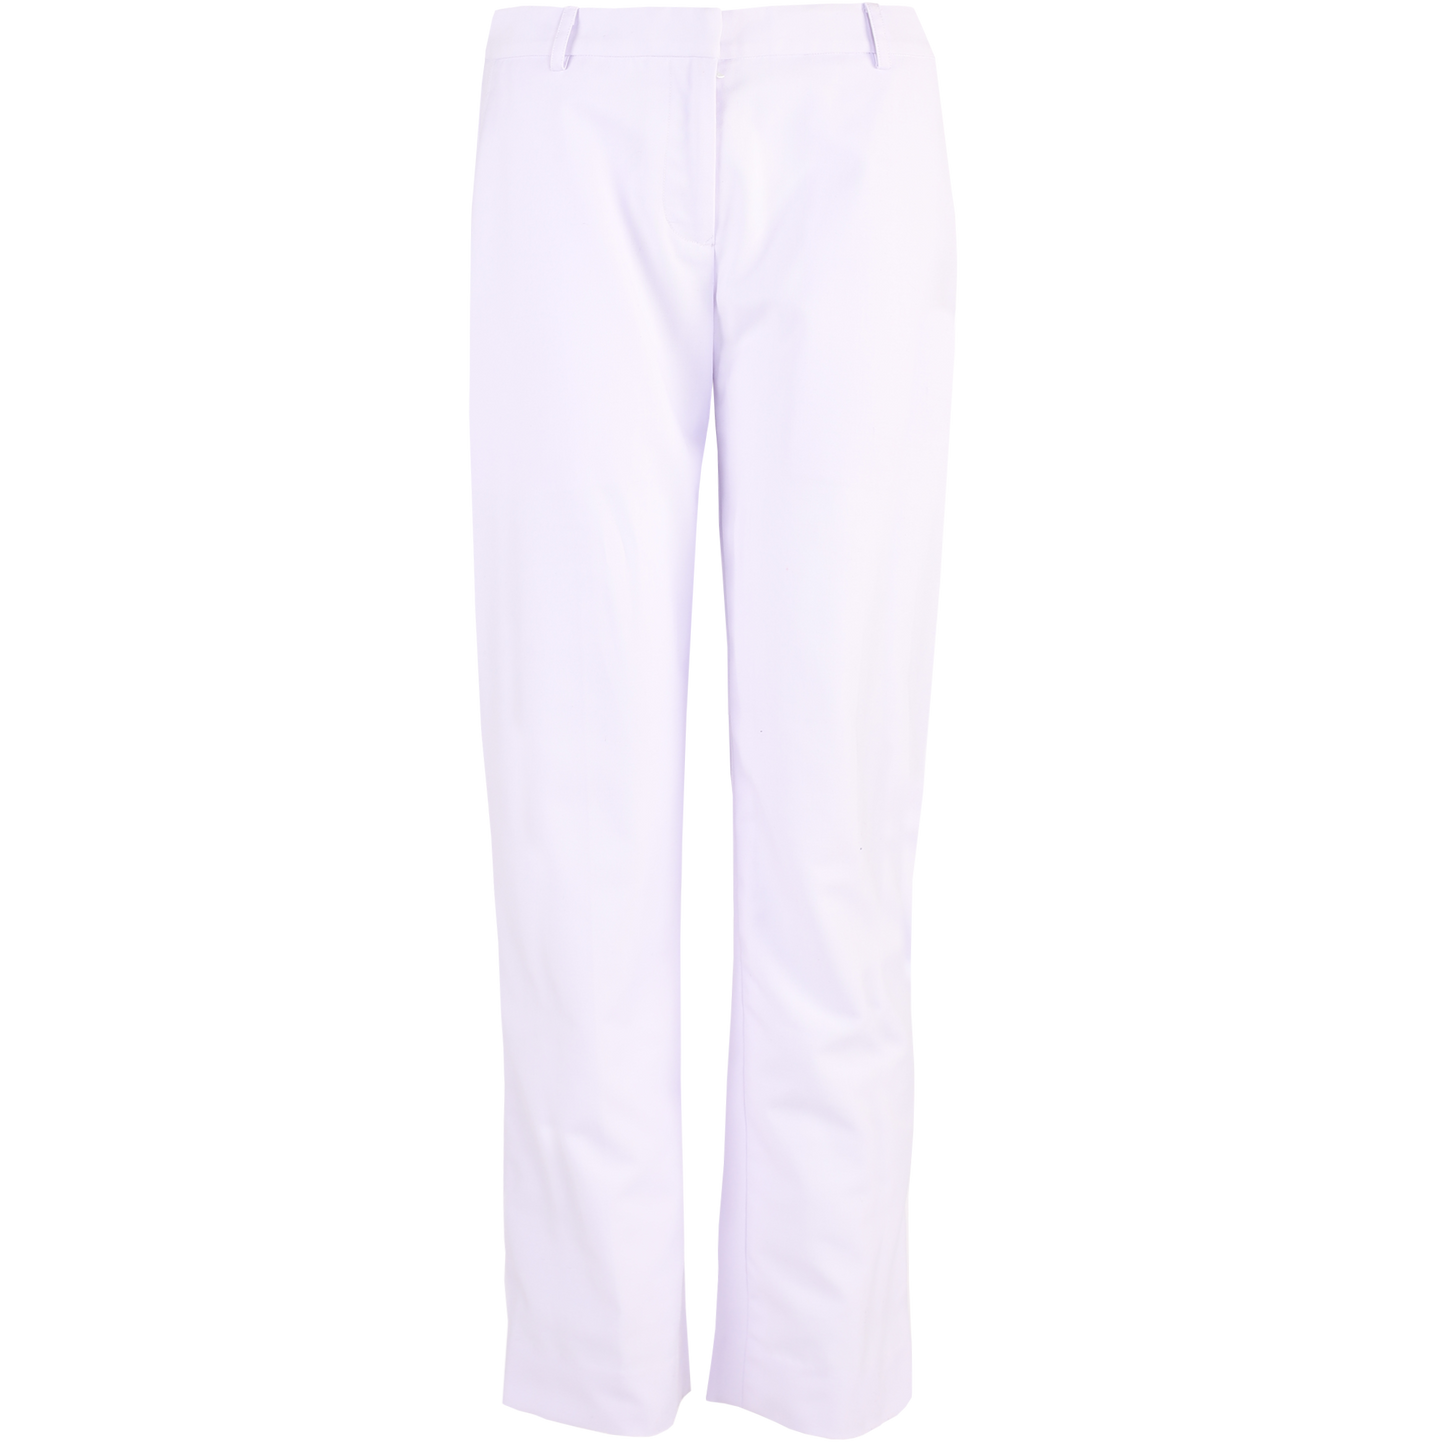 White Ladies Pants — Uniforms by CYC Corporate Label